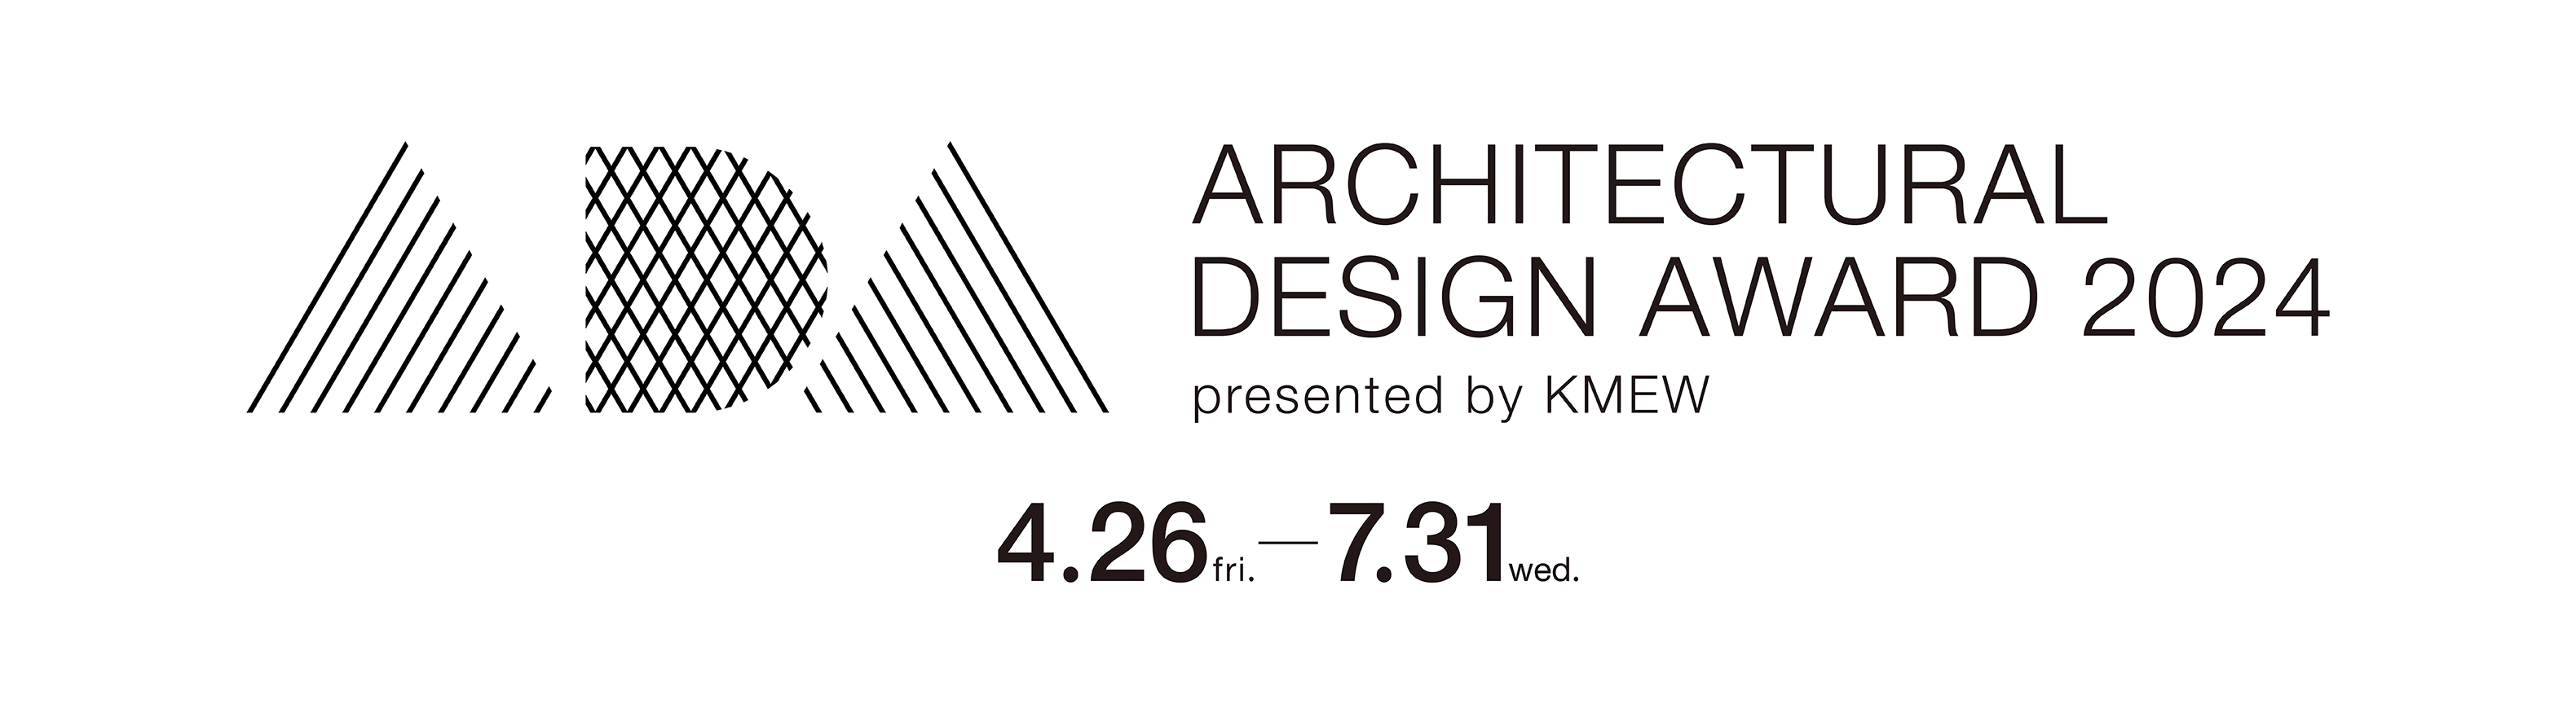 ARCHITECTURAL DESIGN AWARD 2024